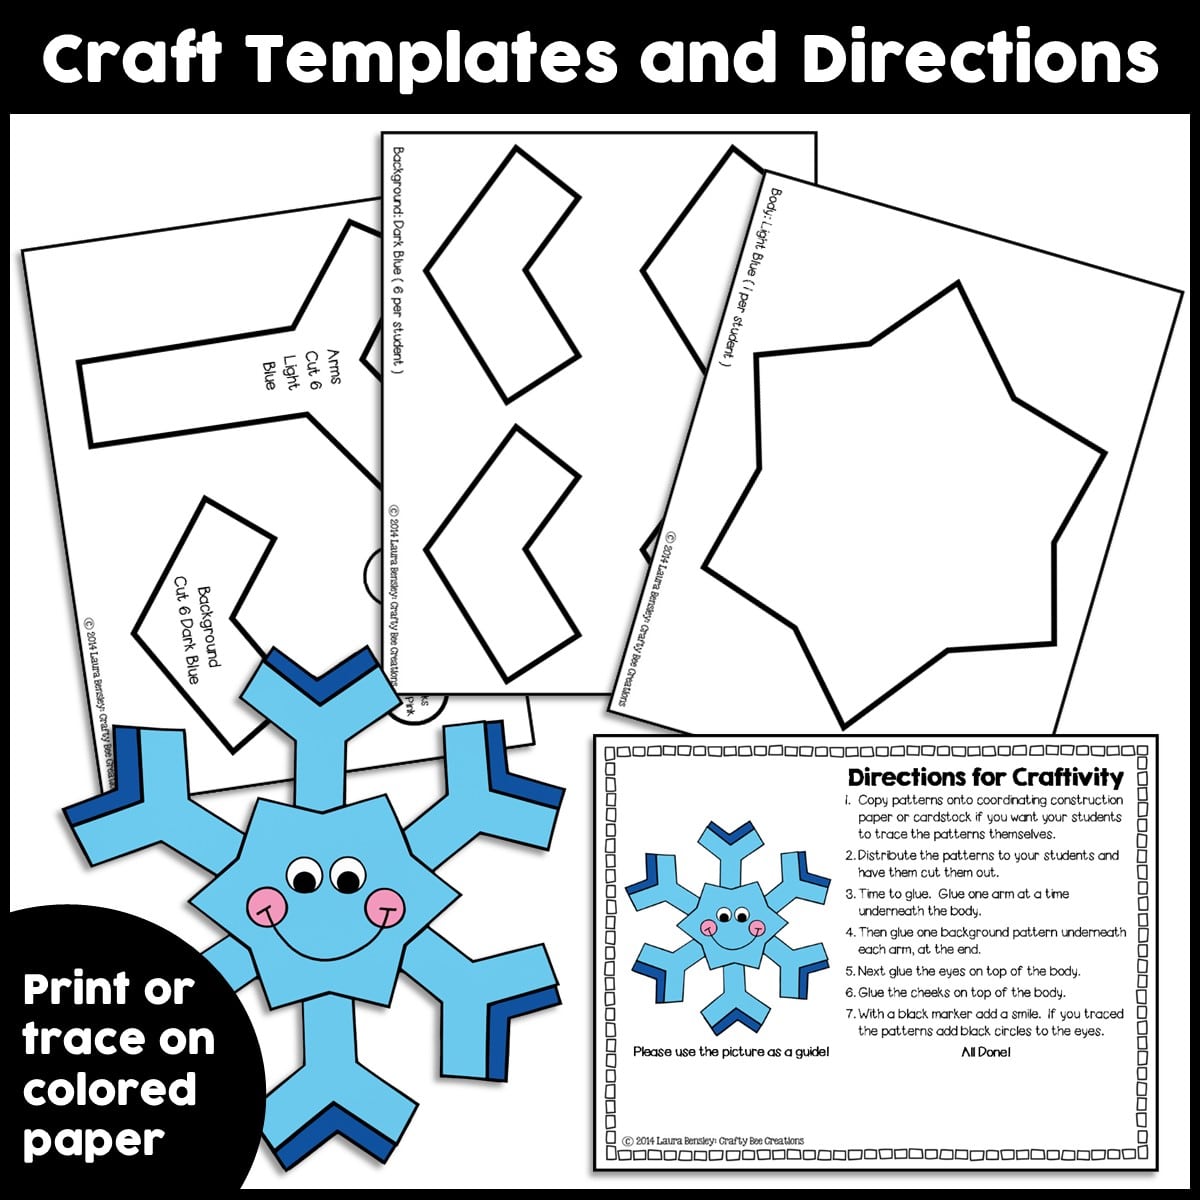 Winter paper craft bundle – Super Fun Printables